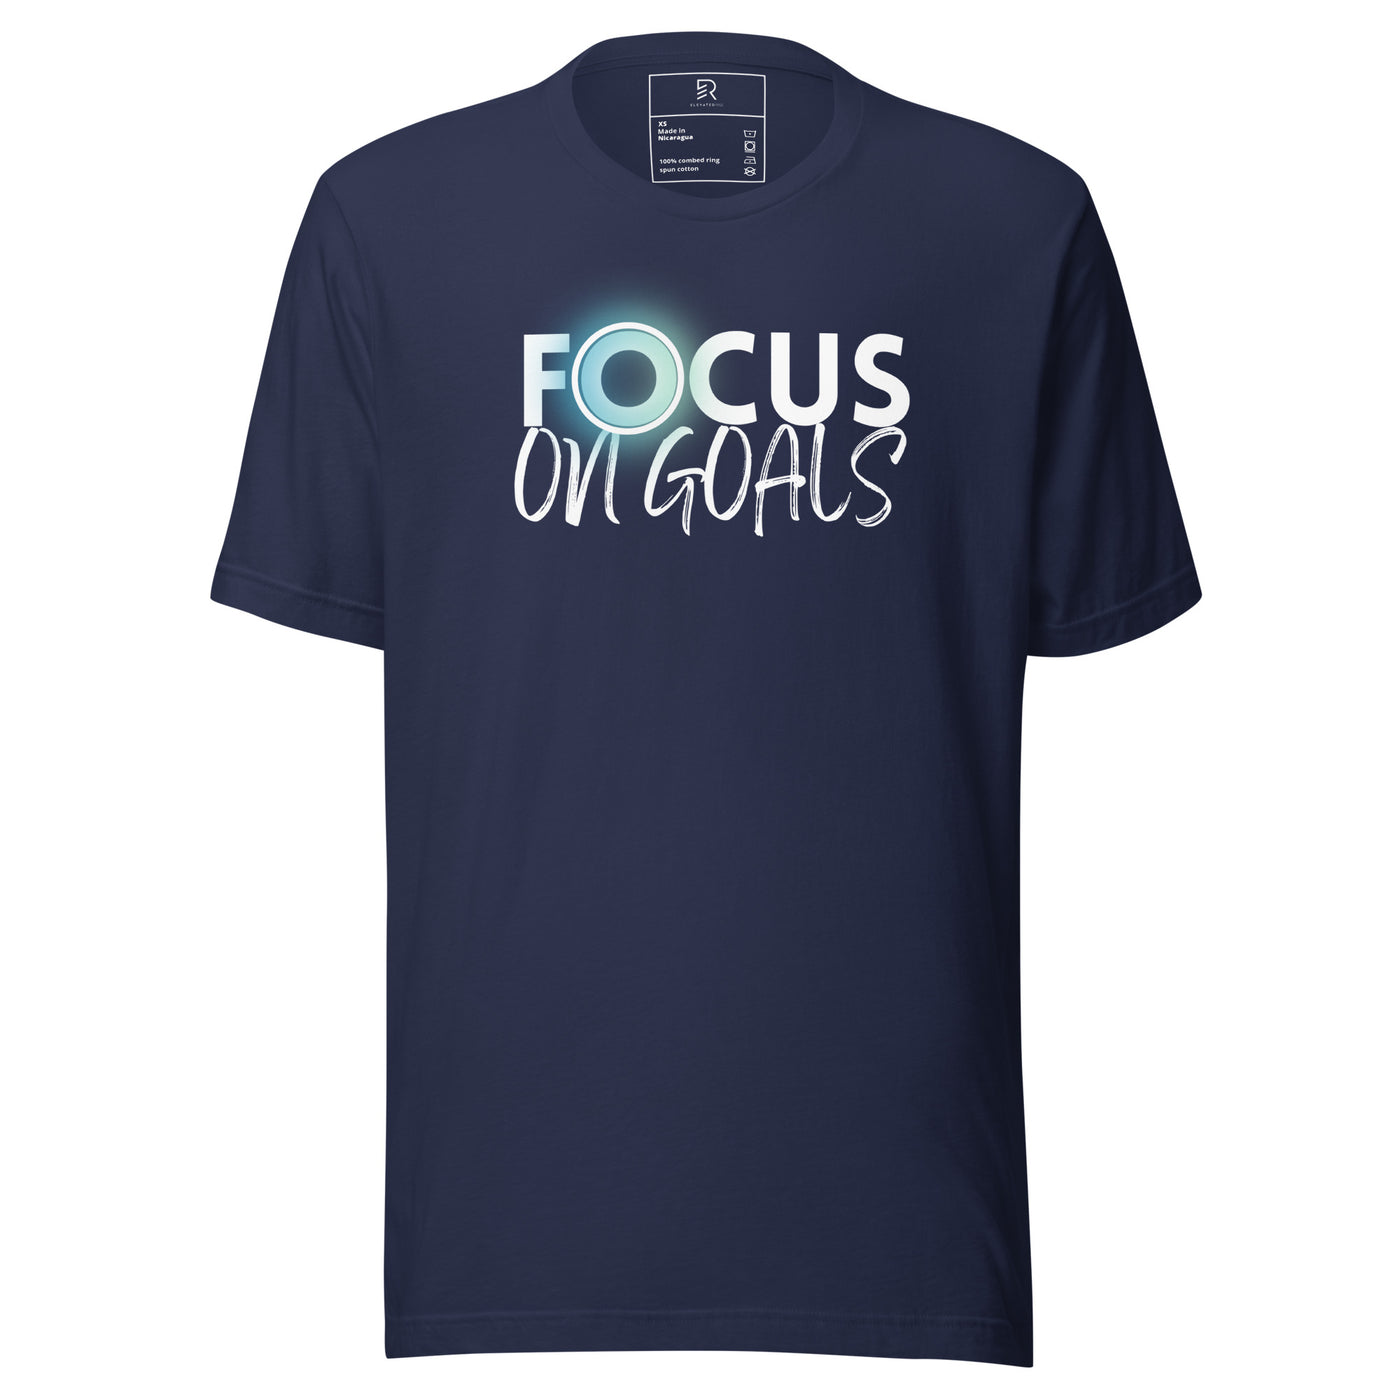 Men's Navy Staple T-Shirt - Focus On Goals